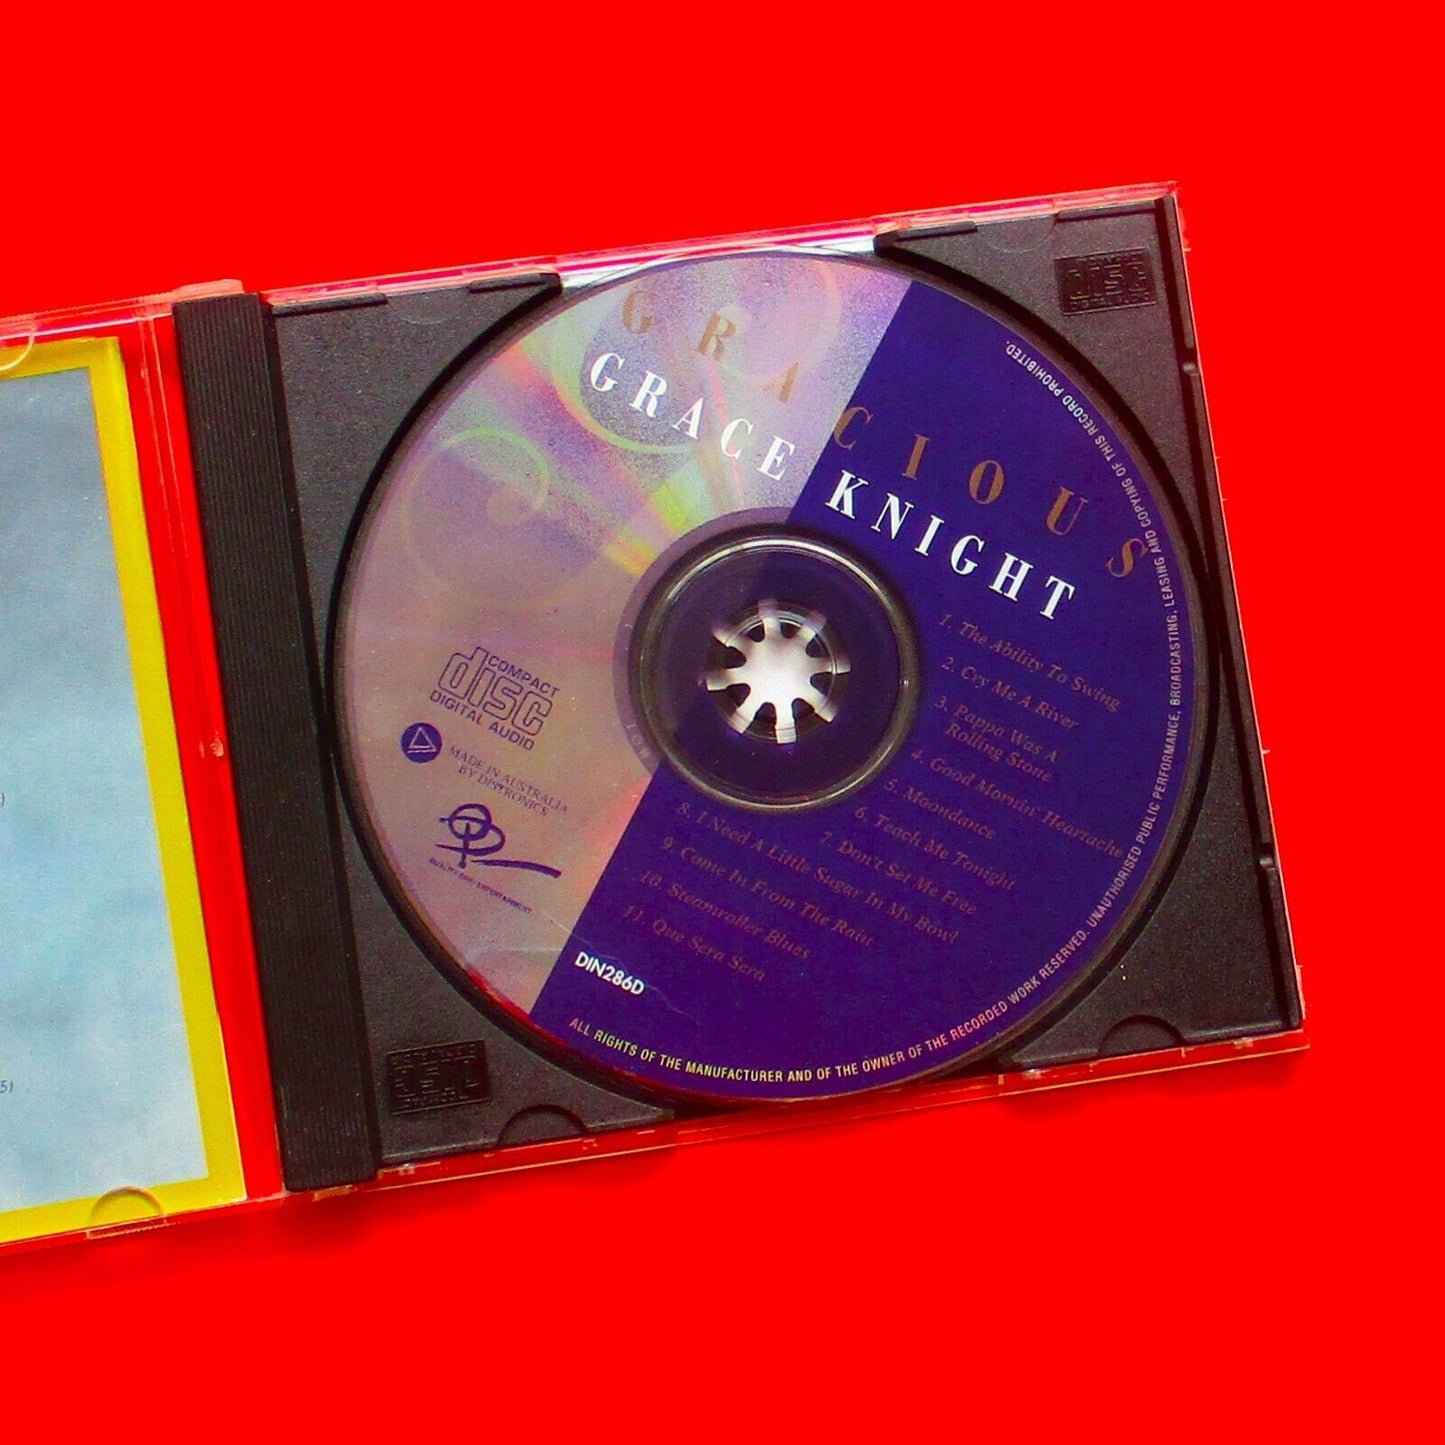 Grace Knight  Gracious 1993 CD Album Australian  Electronic, Jazz, Funk / Soul